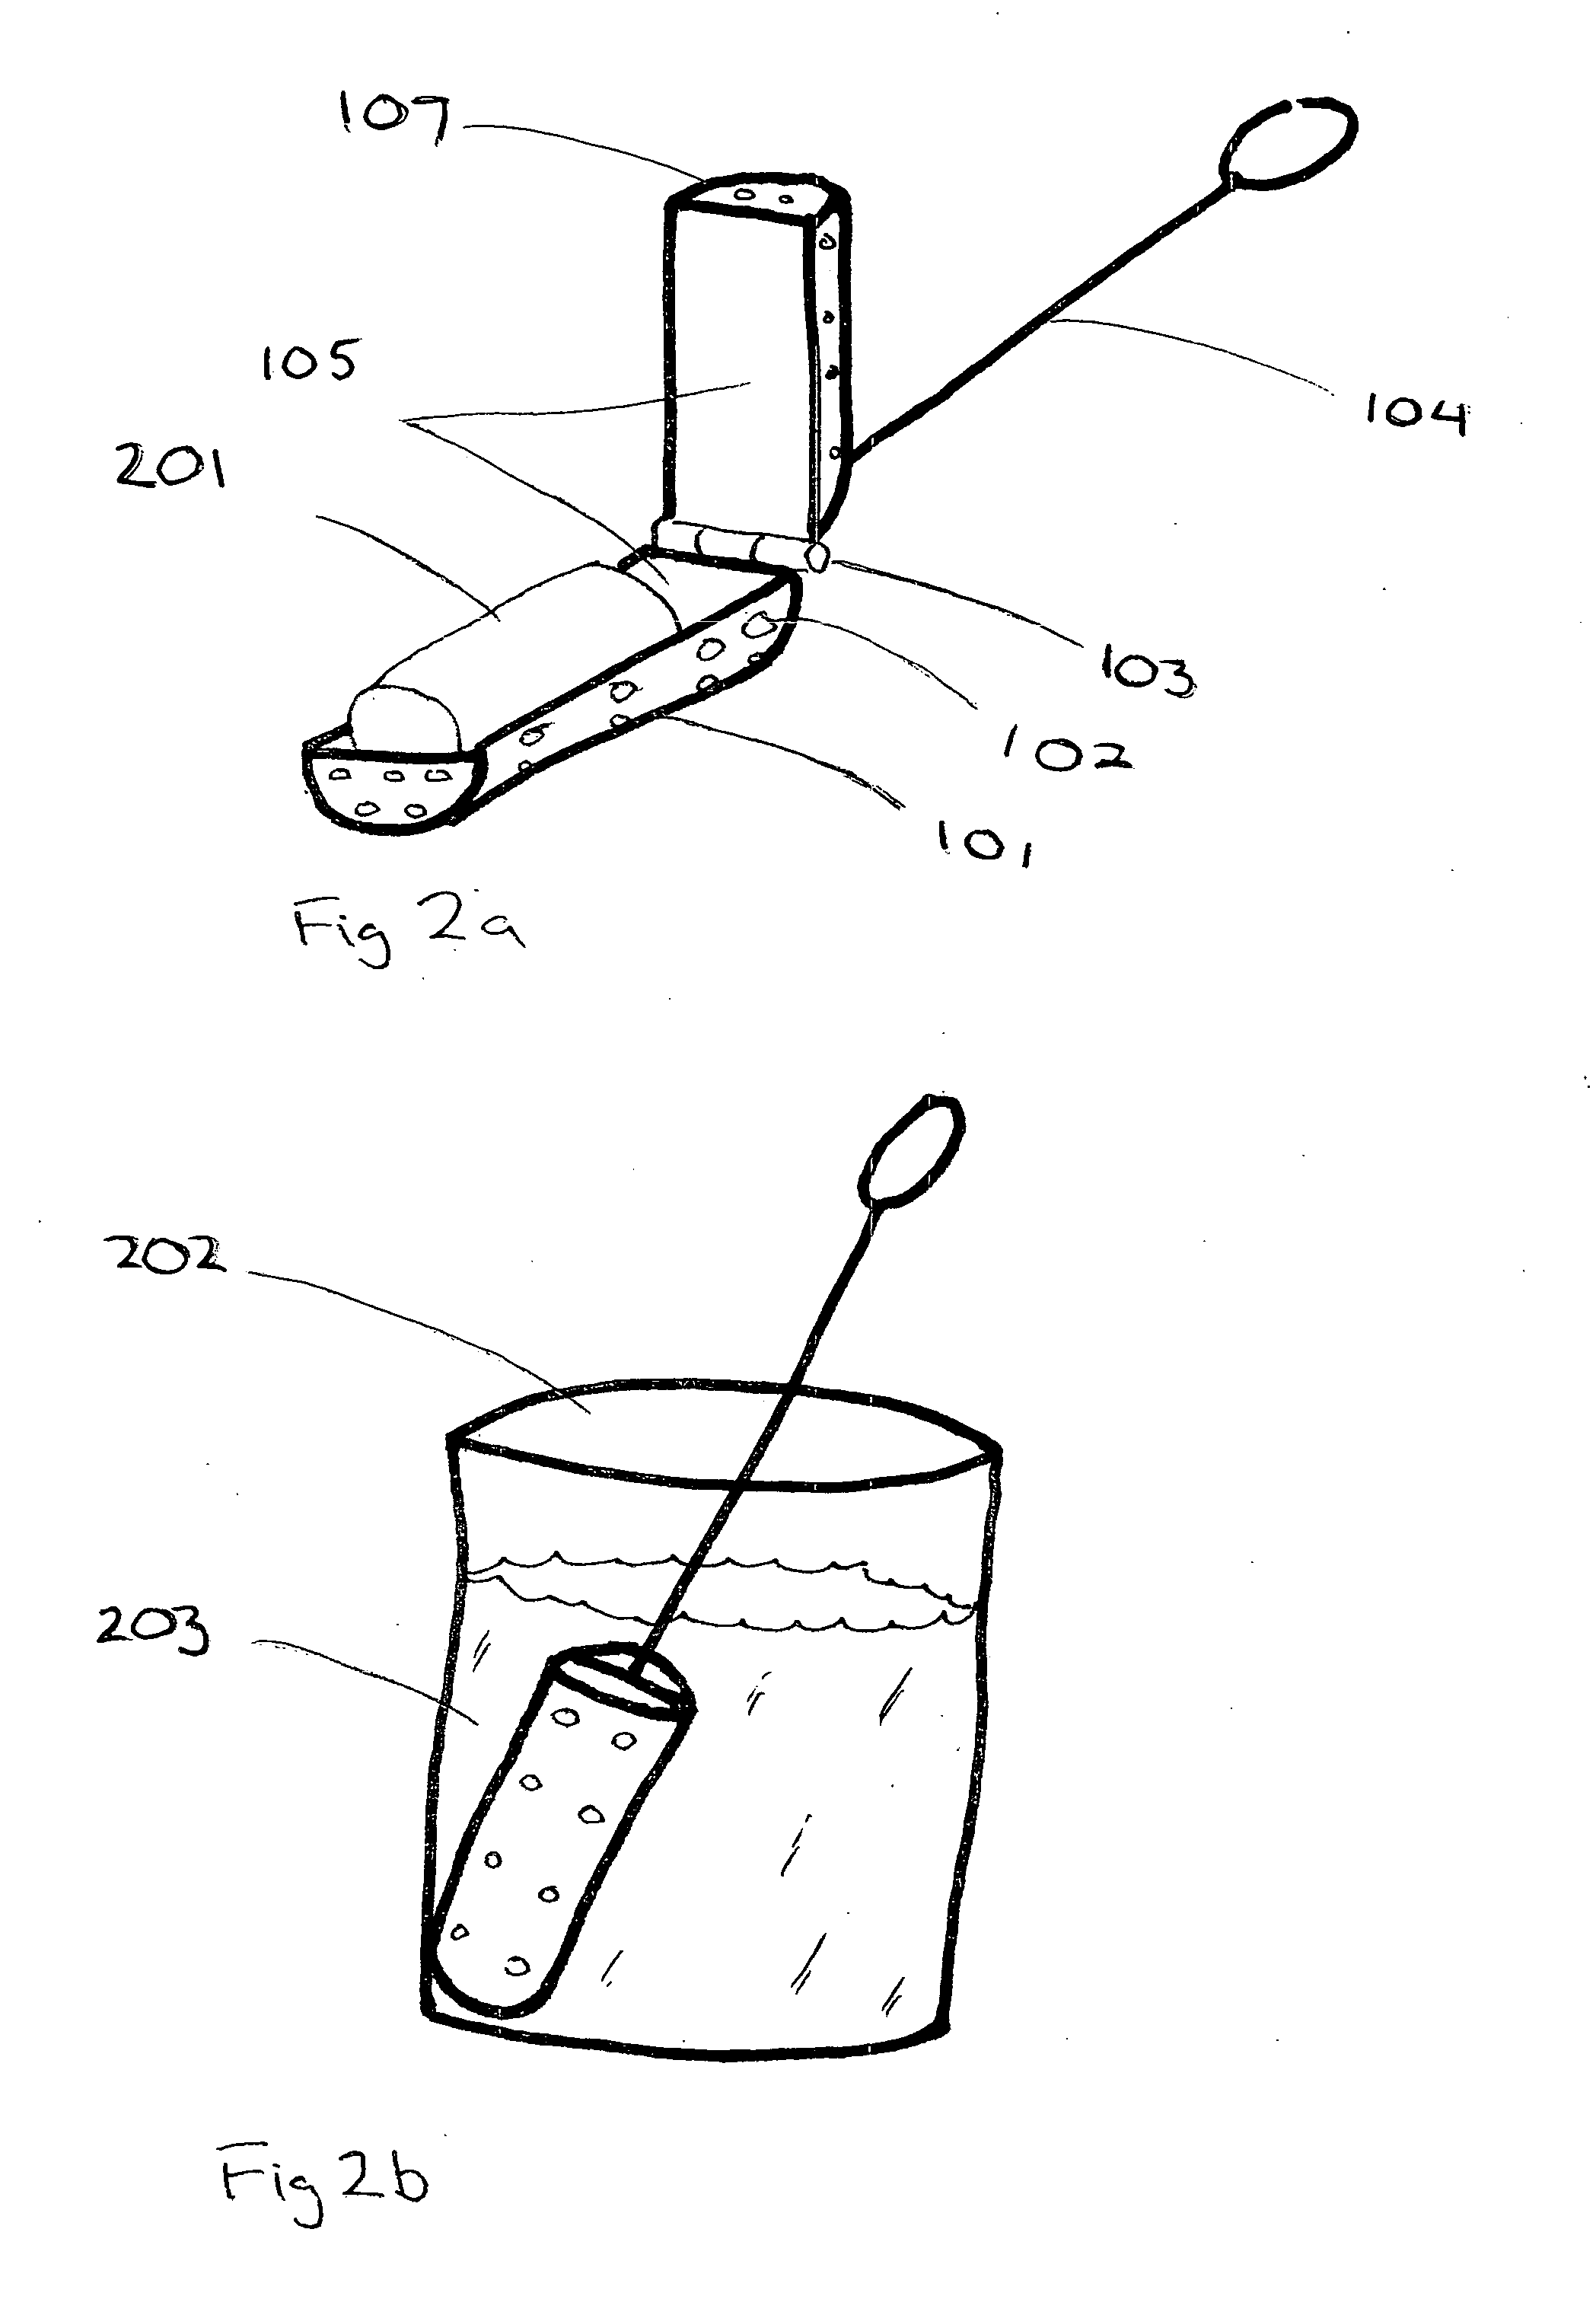 Dry ice vaporizing device and method